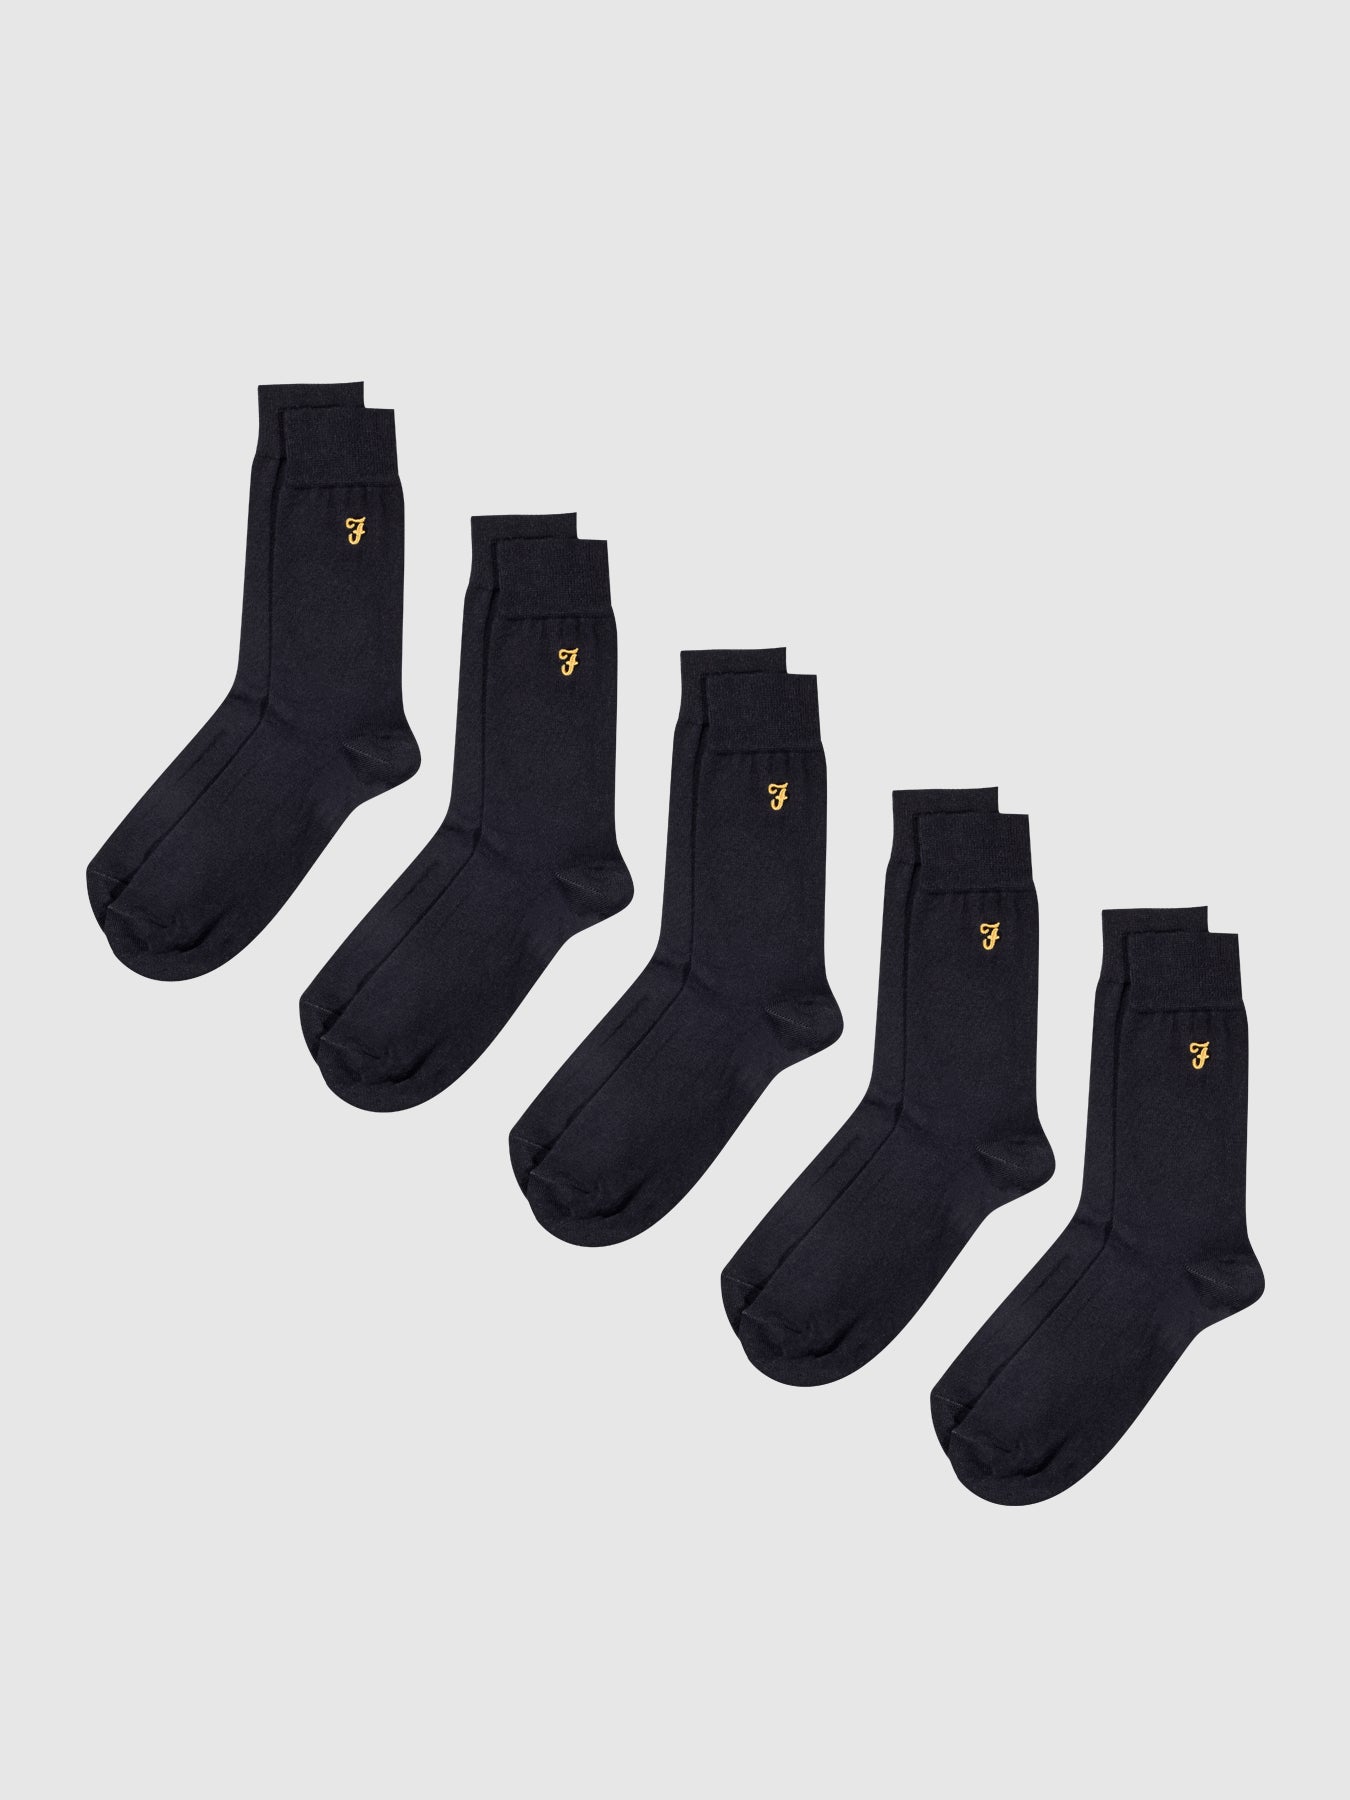 View 5 Pack Kinley Dress Socks In Black information